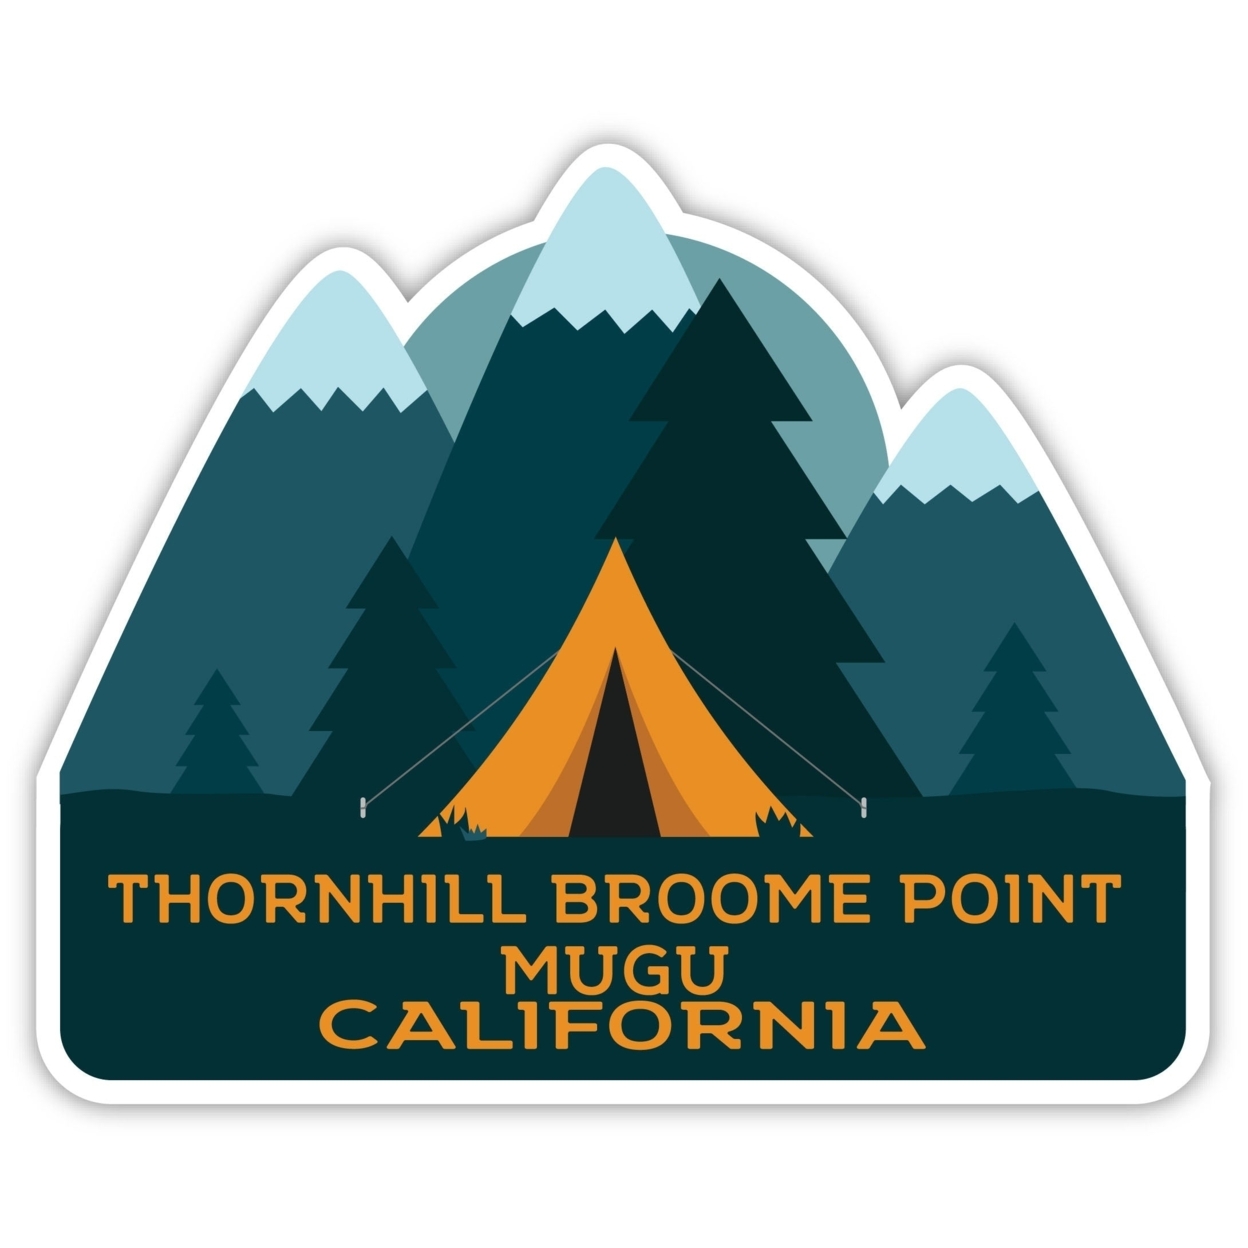 Thornhill Broome Point Mugu California Souvenir Decorative Stickers (Choose Theme And Size) - Single Unit, 4-Inch, Tent